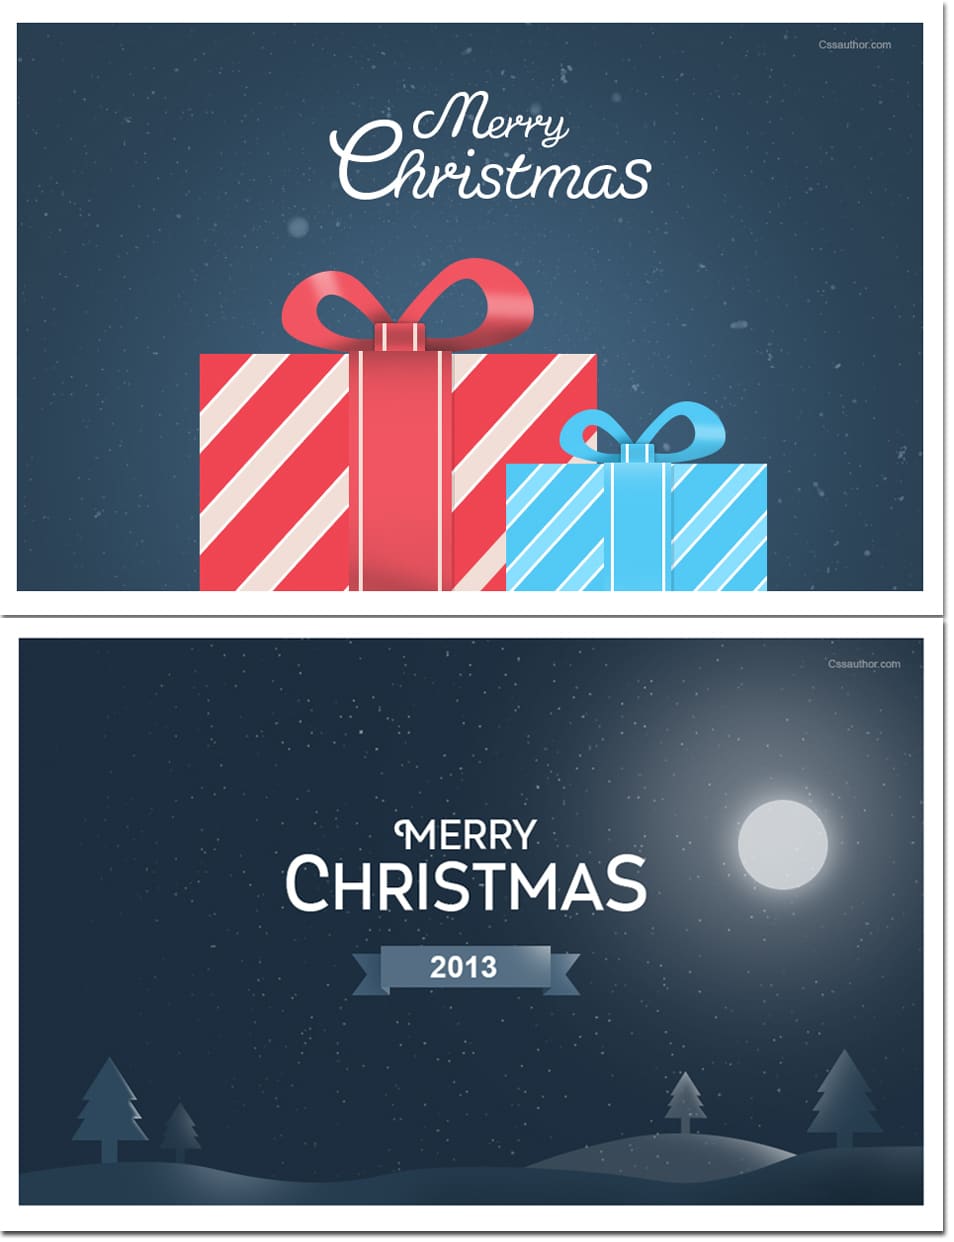 Free Christmas Greeting Cards PSD